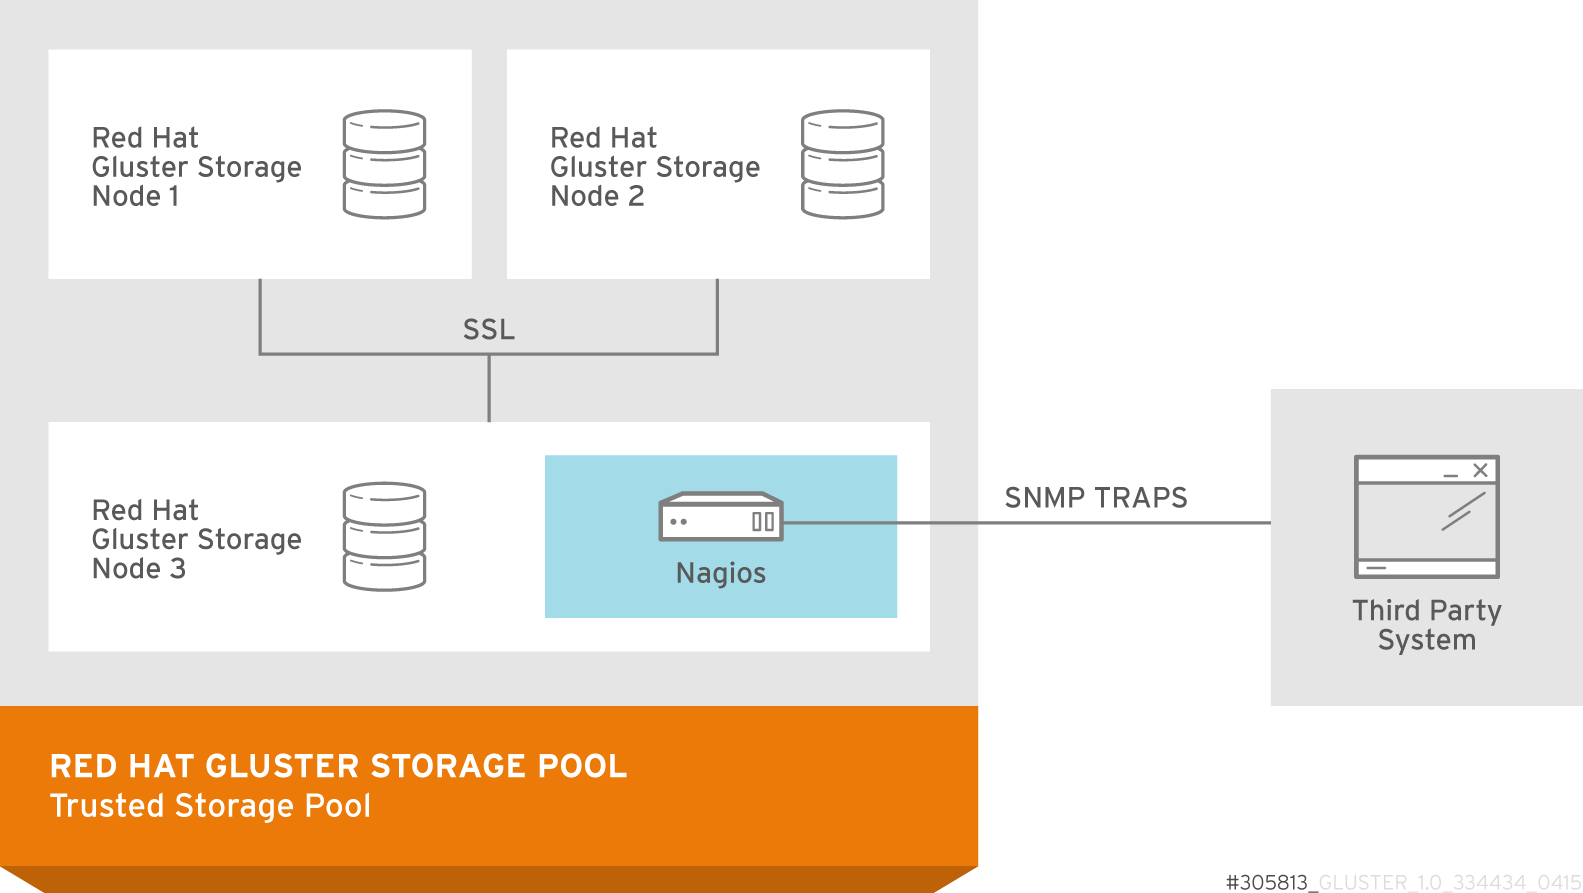 Nagios deployed on Red Hat Gluster Storage node